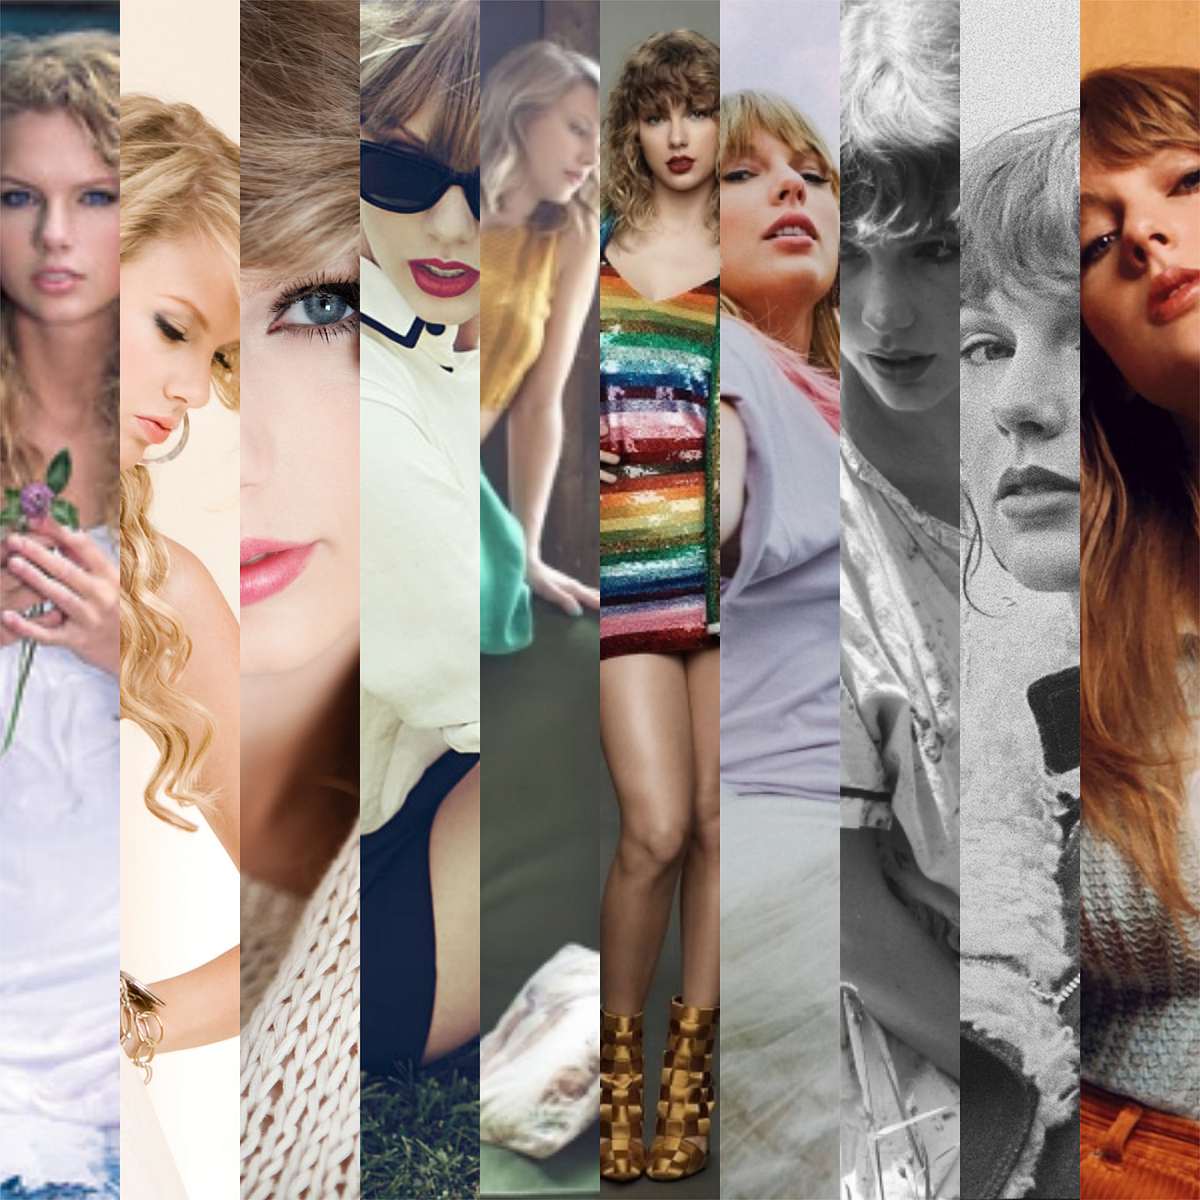 Alliance Taylor Swift - Taylor Swift (CD)